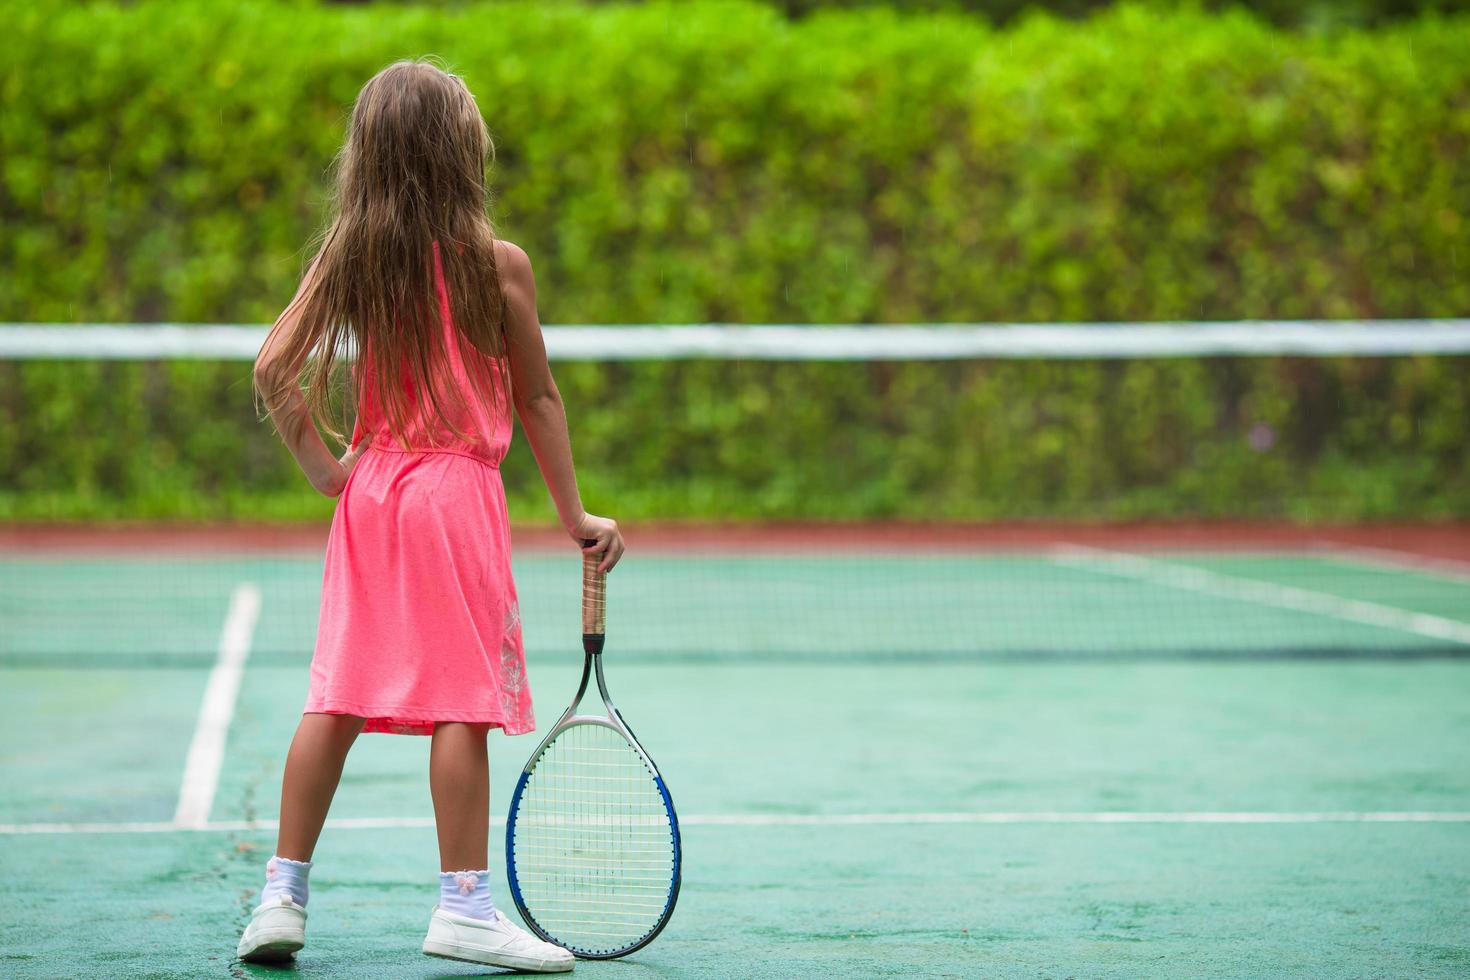 meisje op een tennisbaan foto